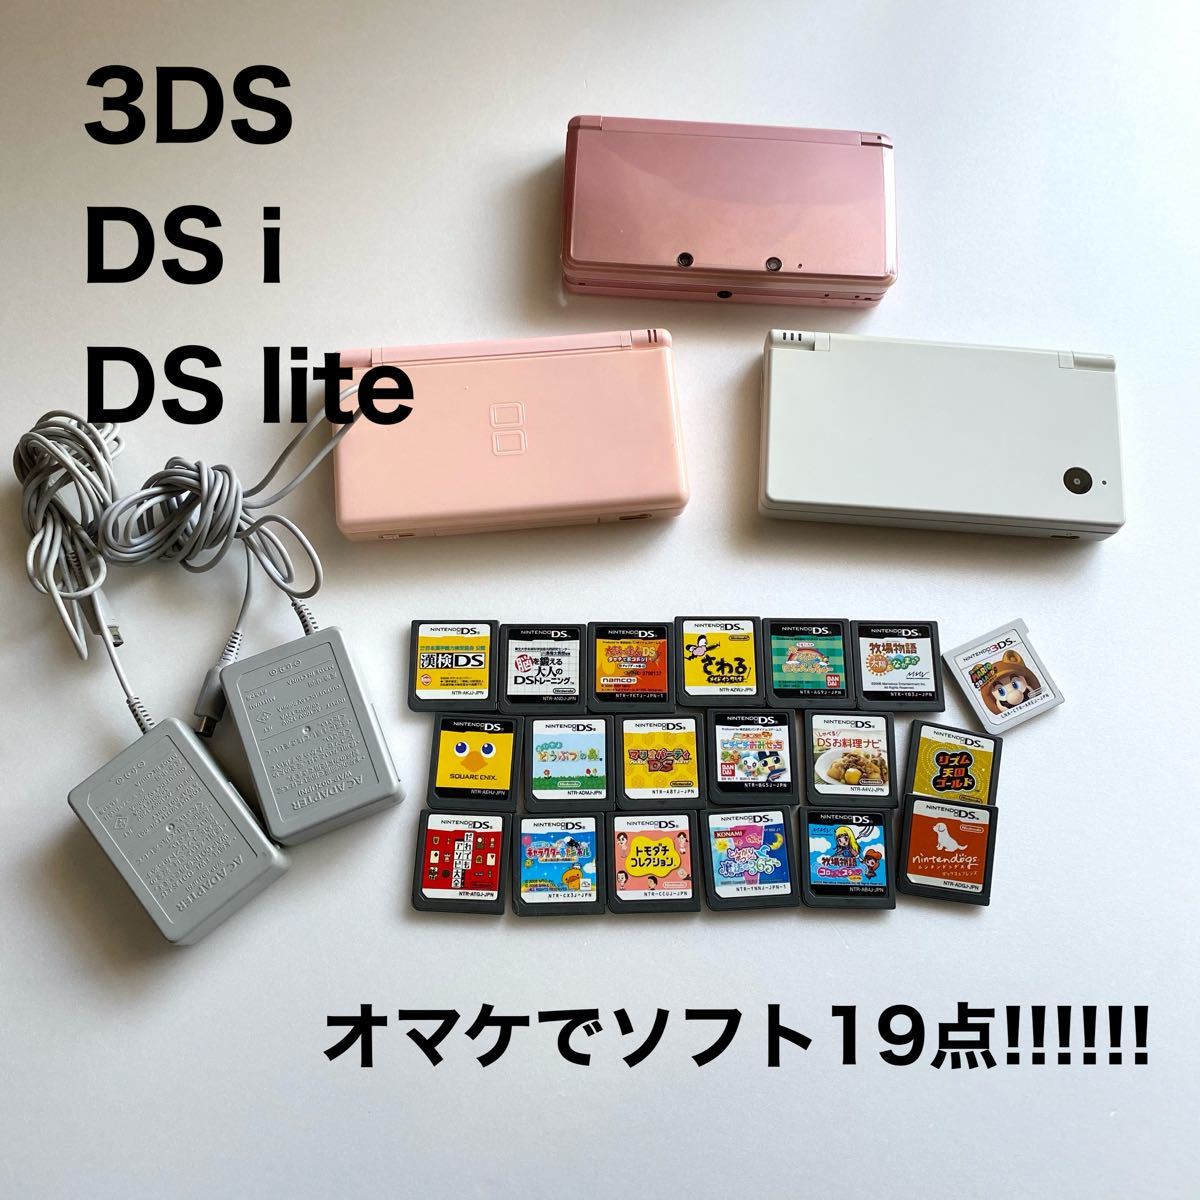 3DS DSi DS lite 本体3点 ソフトおまけ